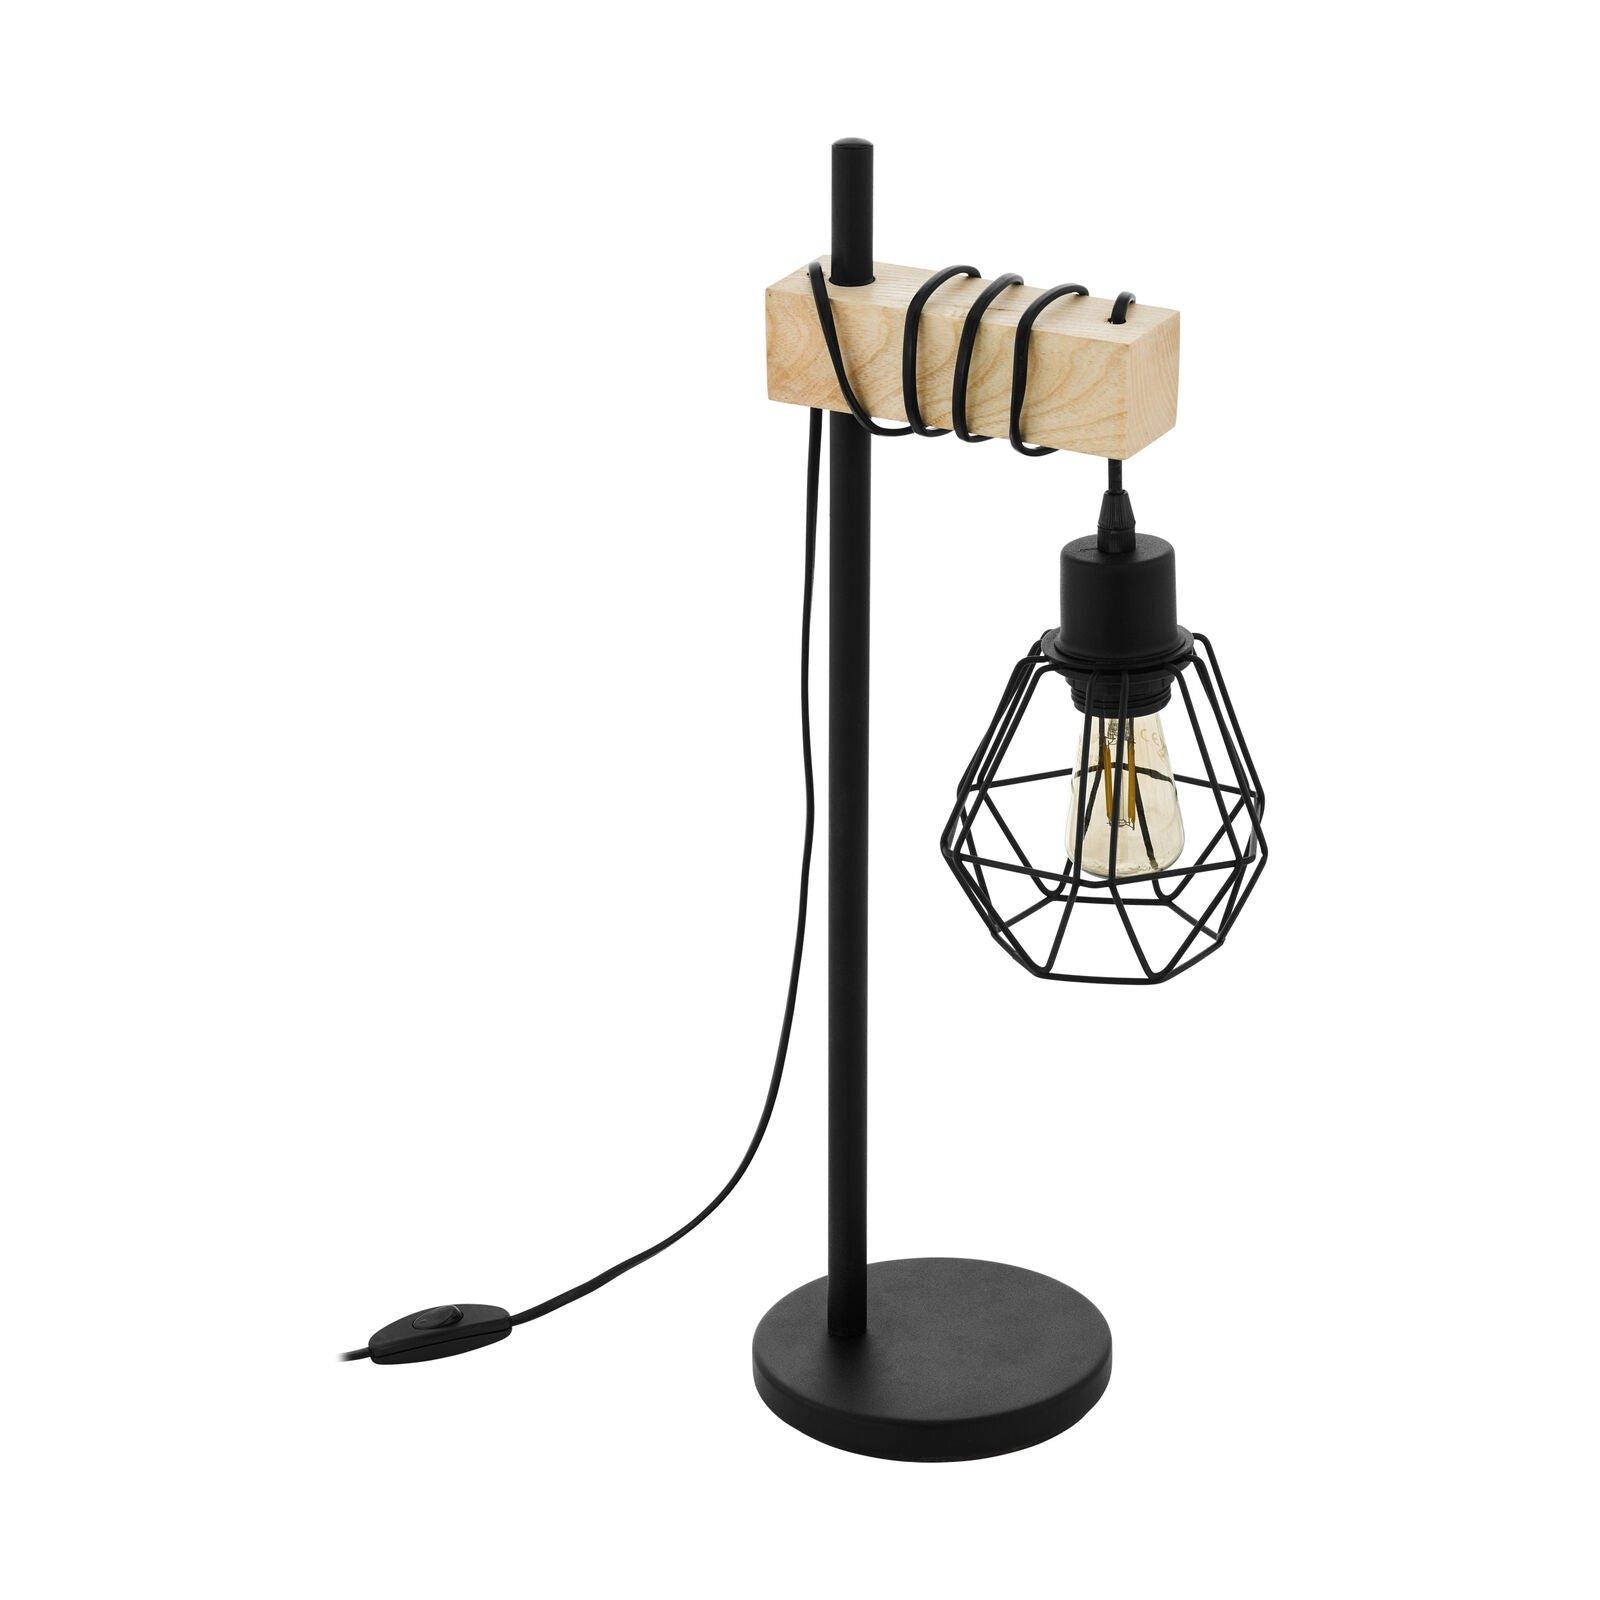 Table Lamp Desk Hangman Light Black Shade & Wood Arm 1 x 60W E27 Bulb